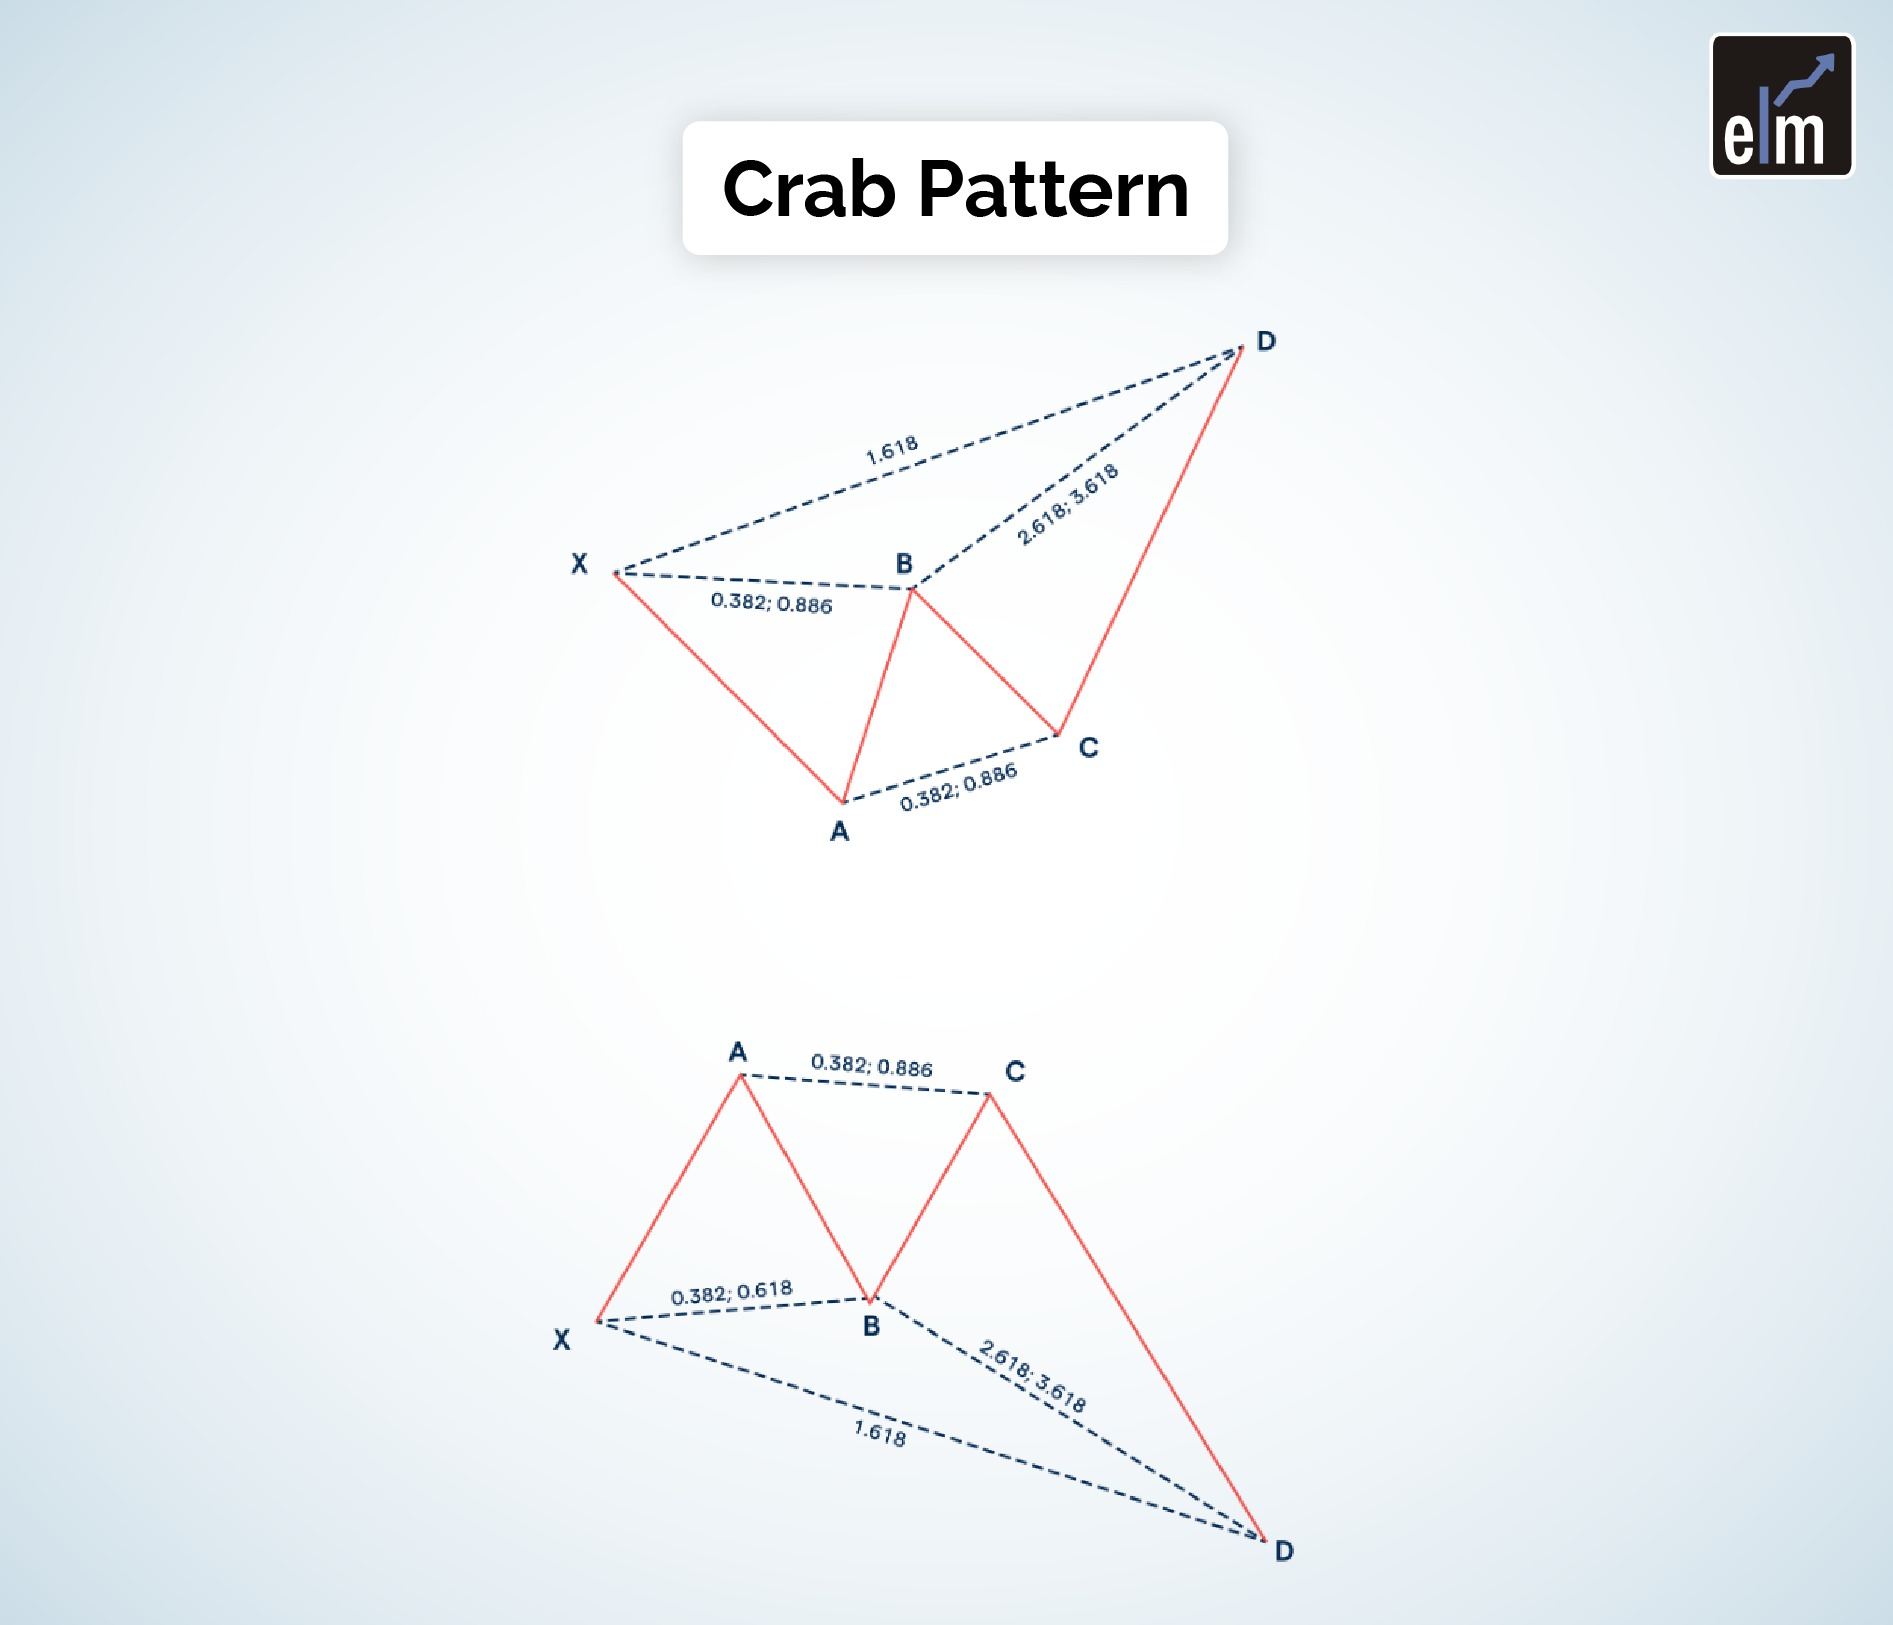 Crab harmonic pattern